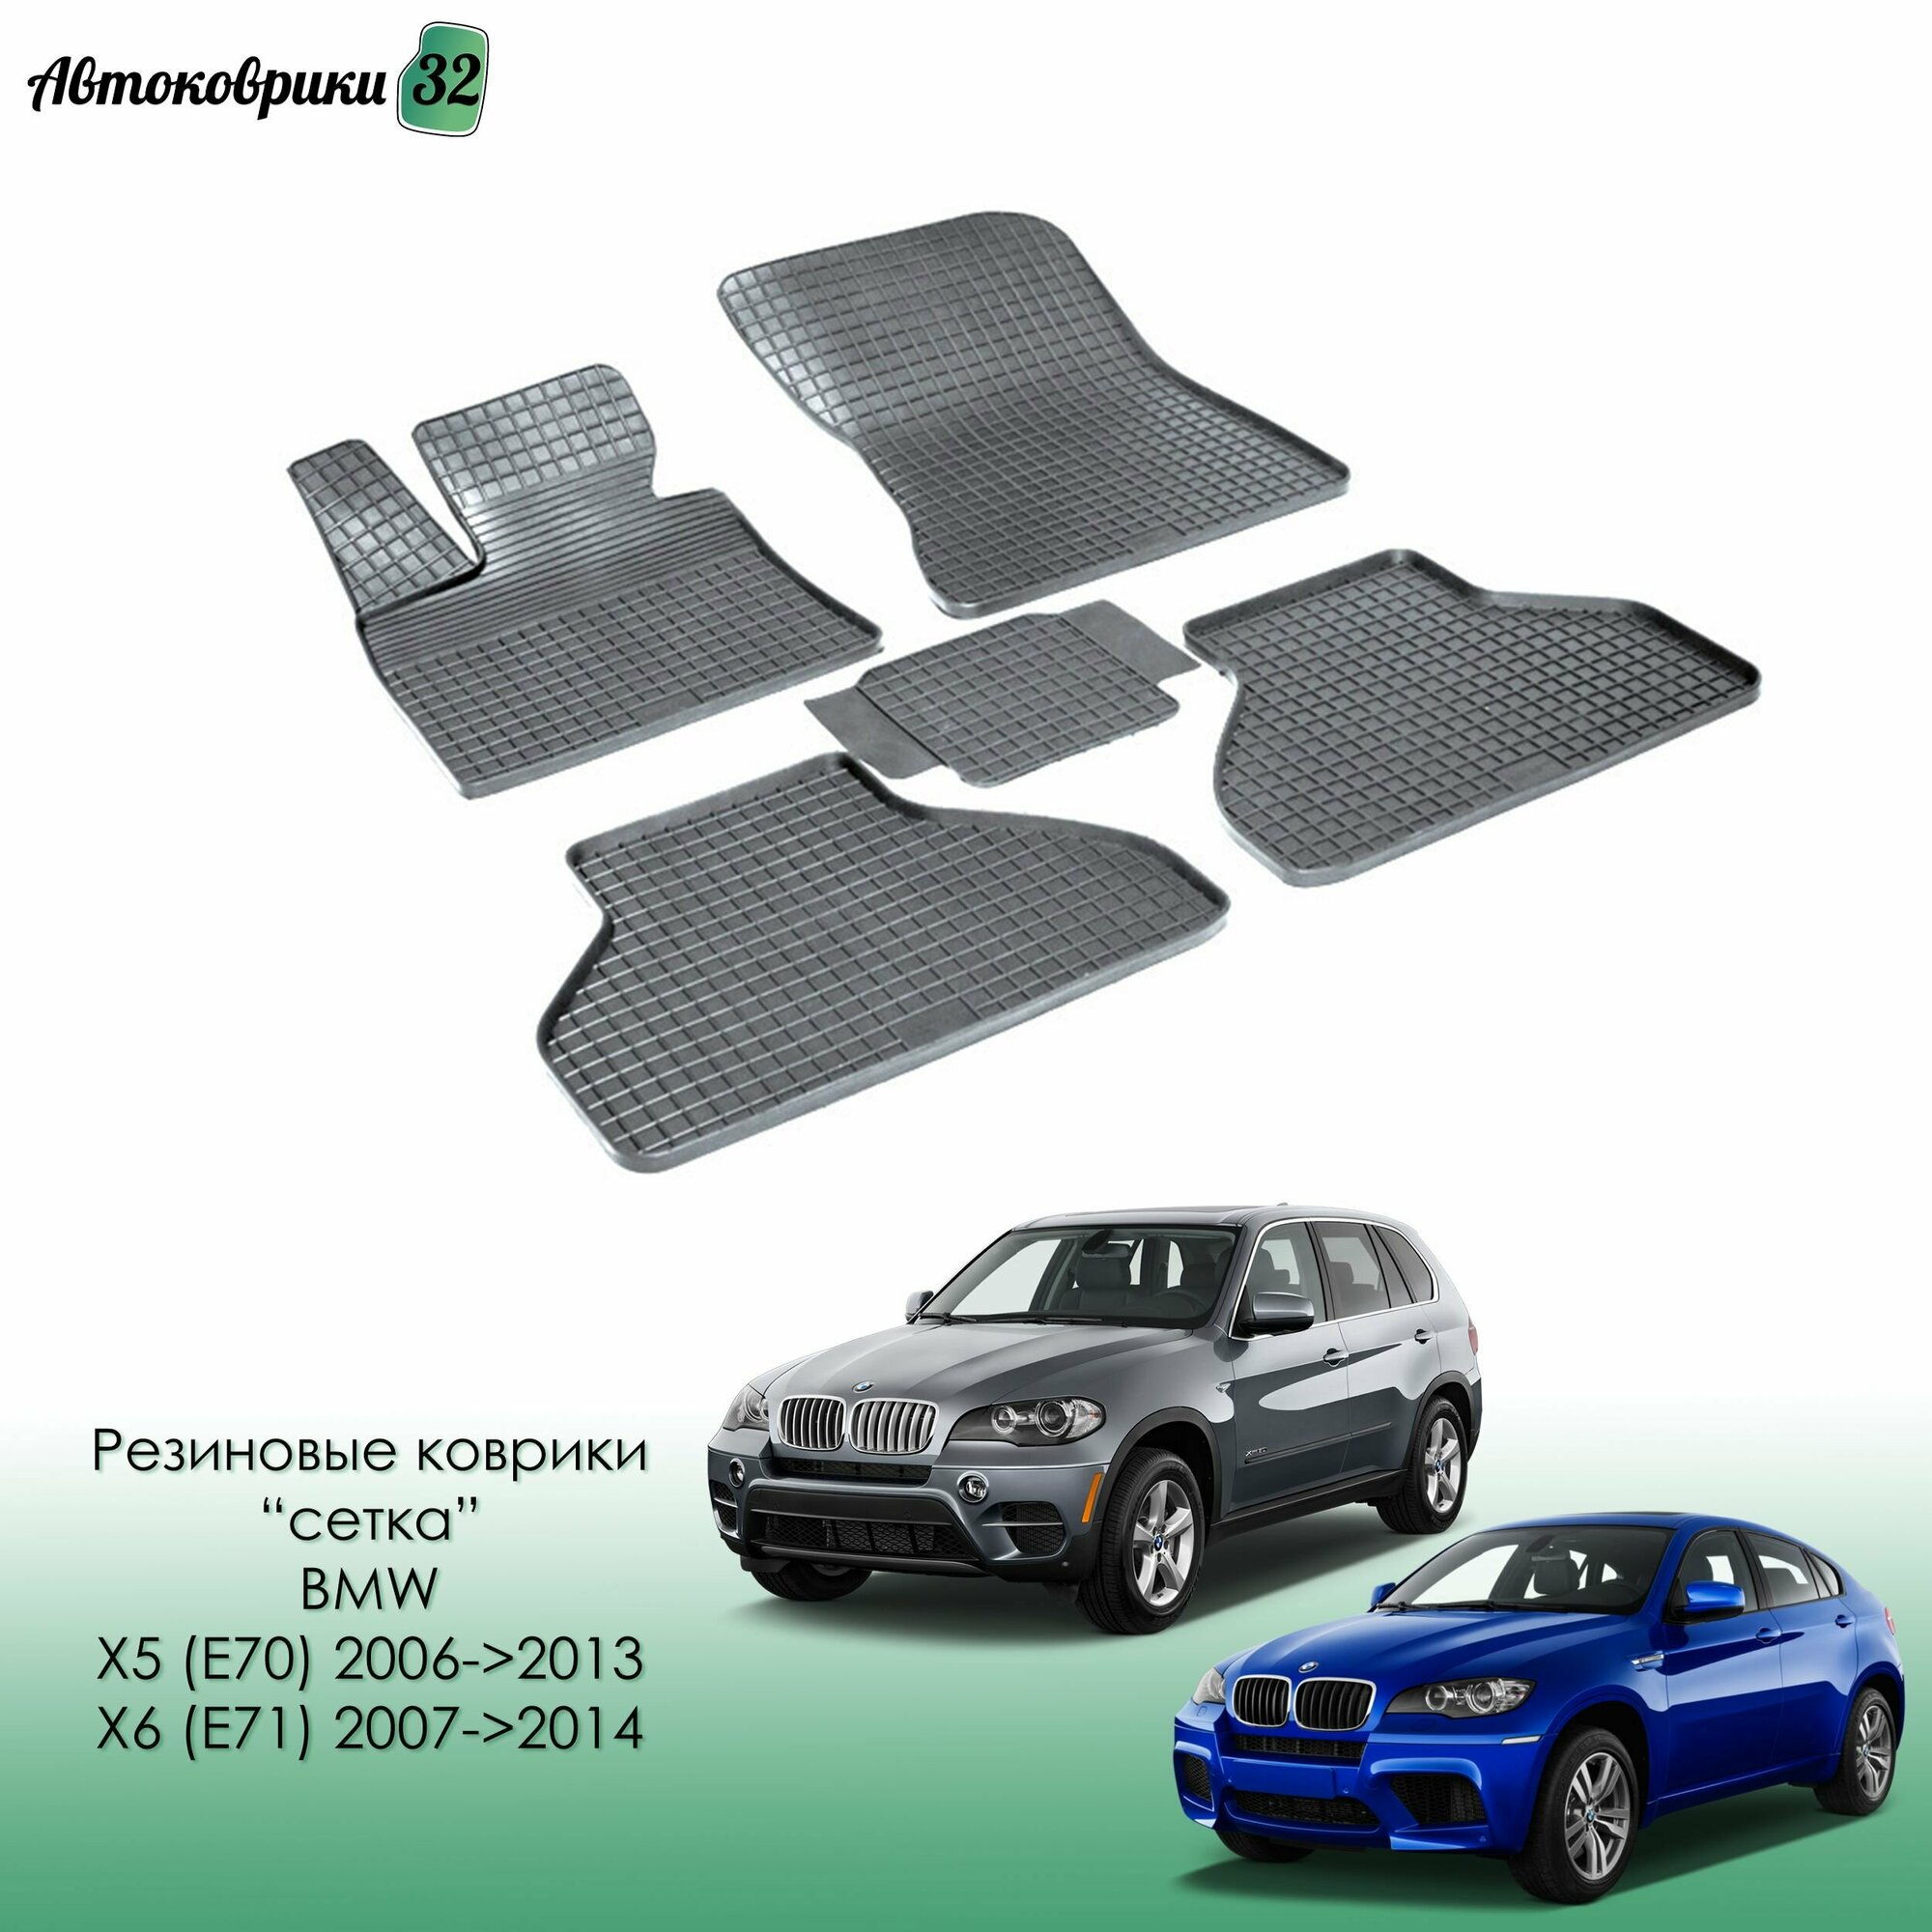 Резиновые коврики сетка для BMW X5 (E70) / X6 (E71) 2006-2014 / БМВ Икс 5 с 2006, 2007 года